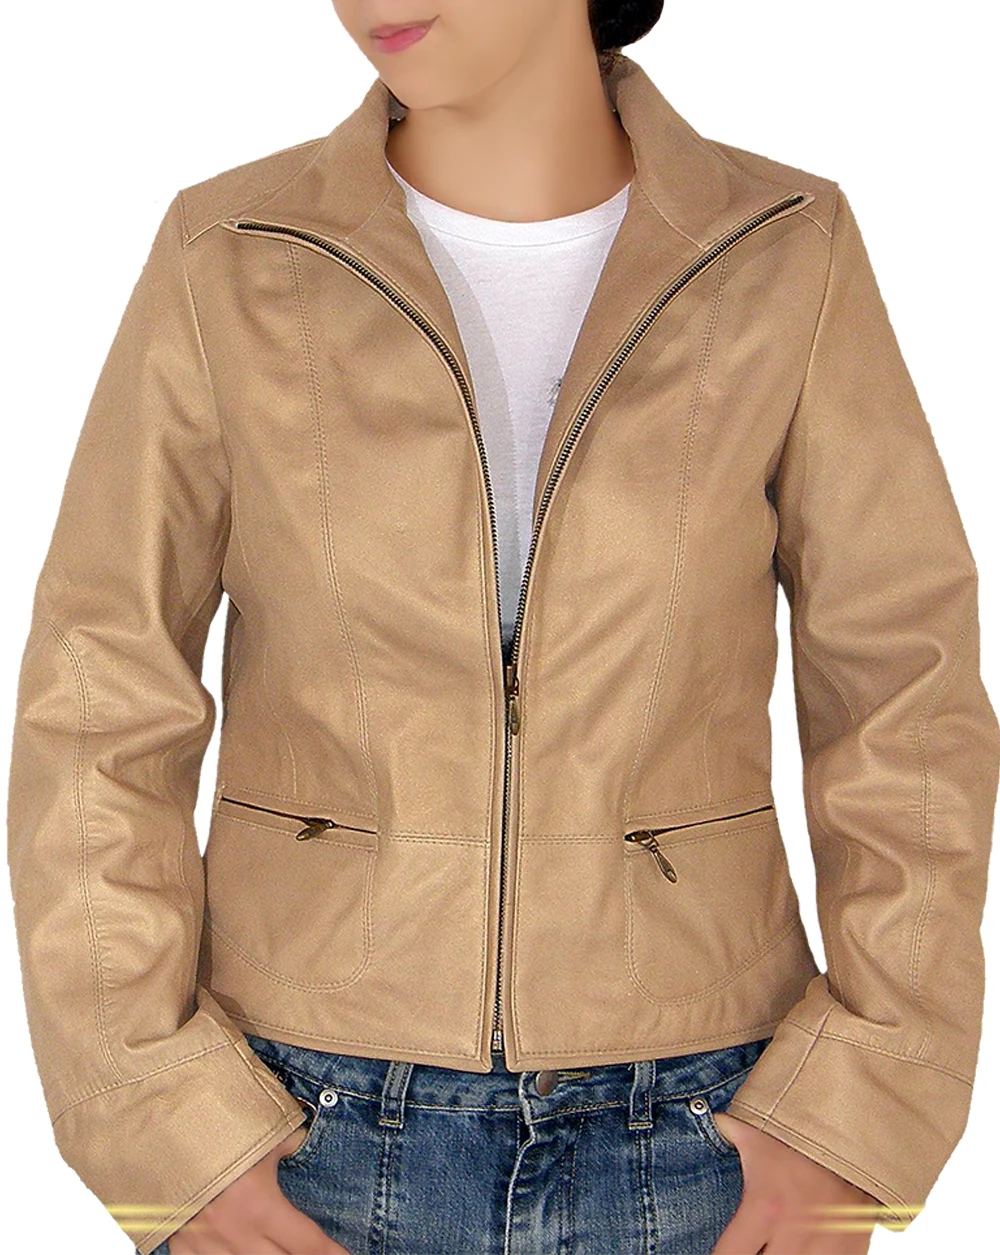 Salina waxed leather jacket